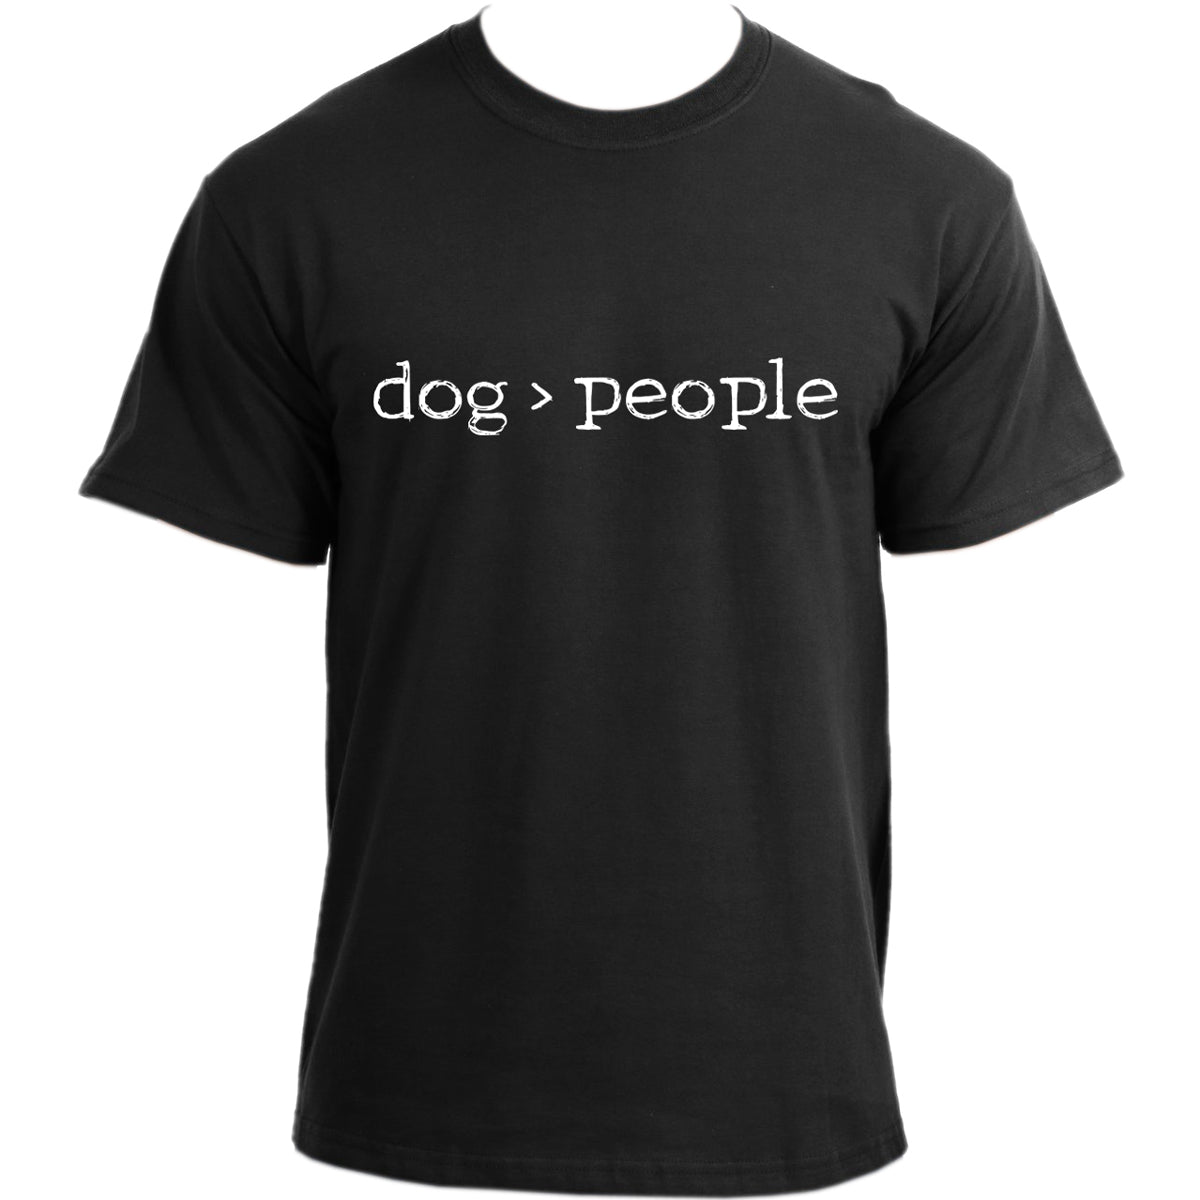 Dog > People Dogs Over People T-shirt I Dog Owner TShirt I Dog Dad Funny T-shirts For Men